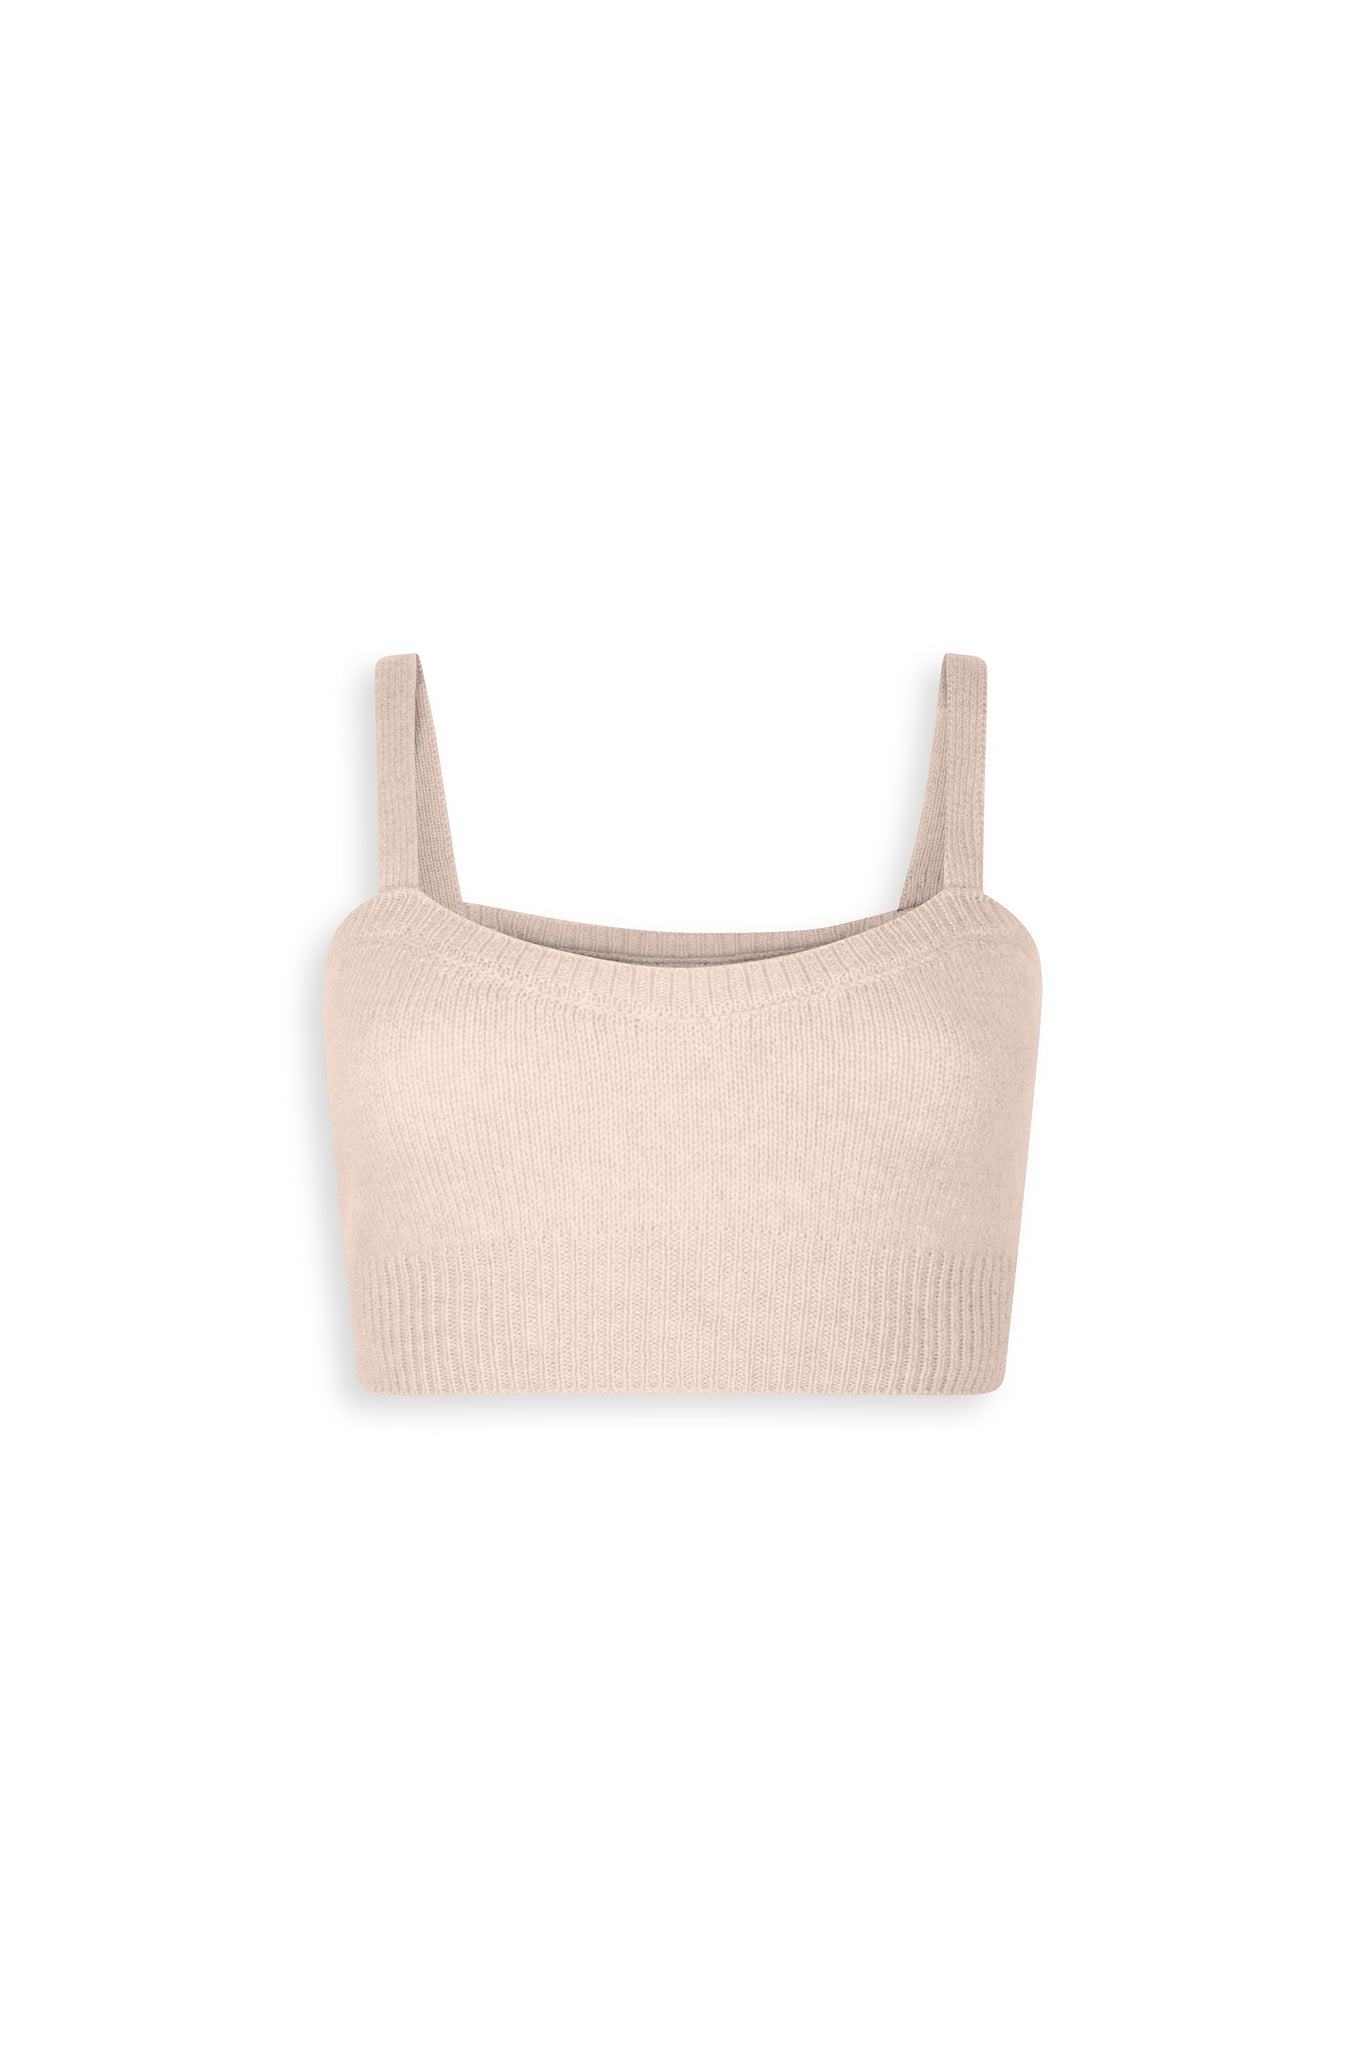 powder pink cashmere crop top with straps